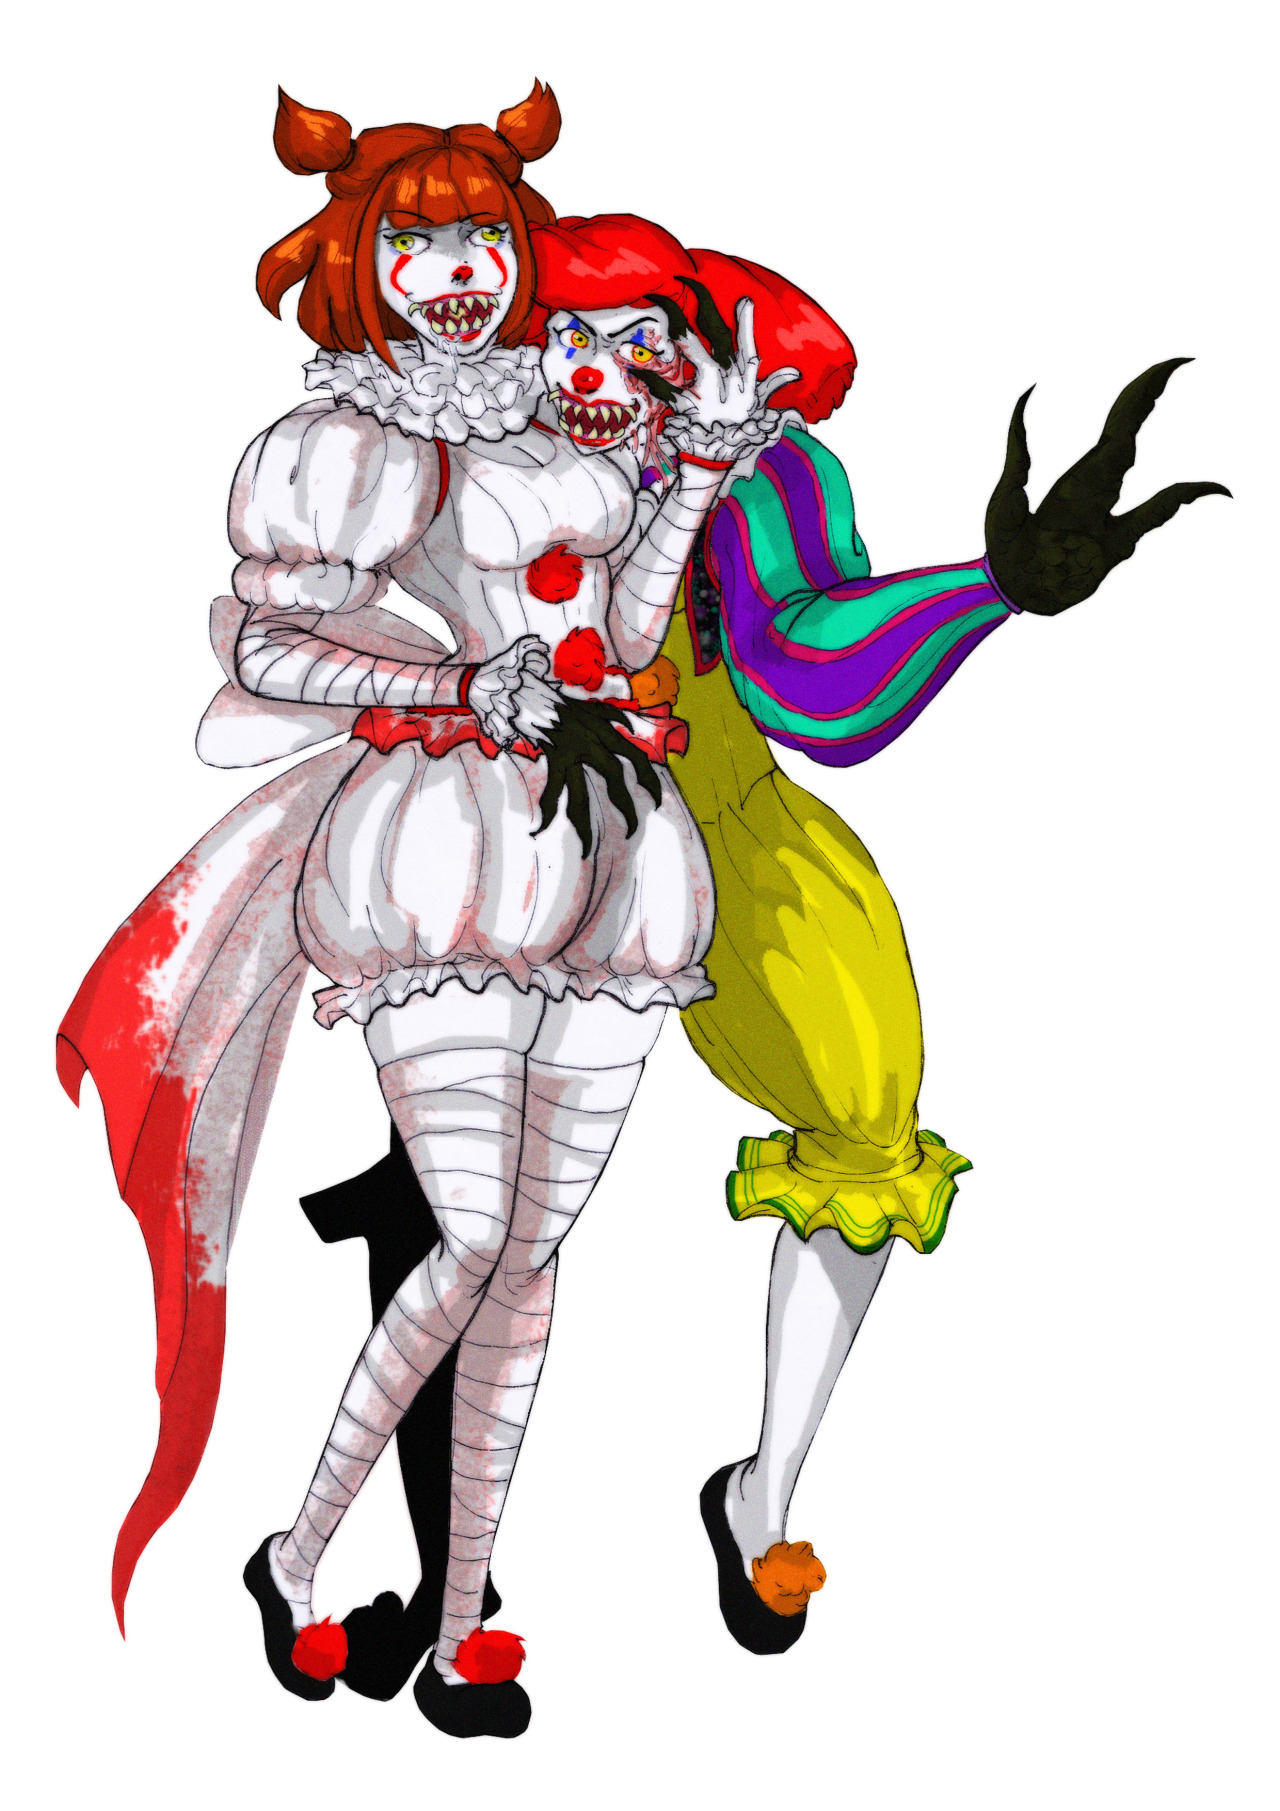 Murderous space clowns but make it Anime Girls™ ... - Don't dream it, Be it